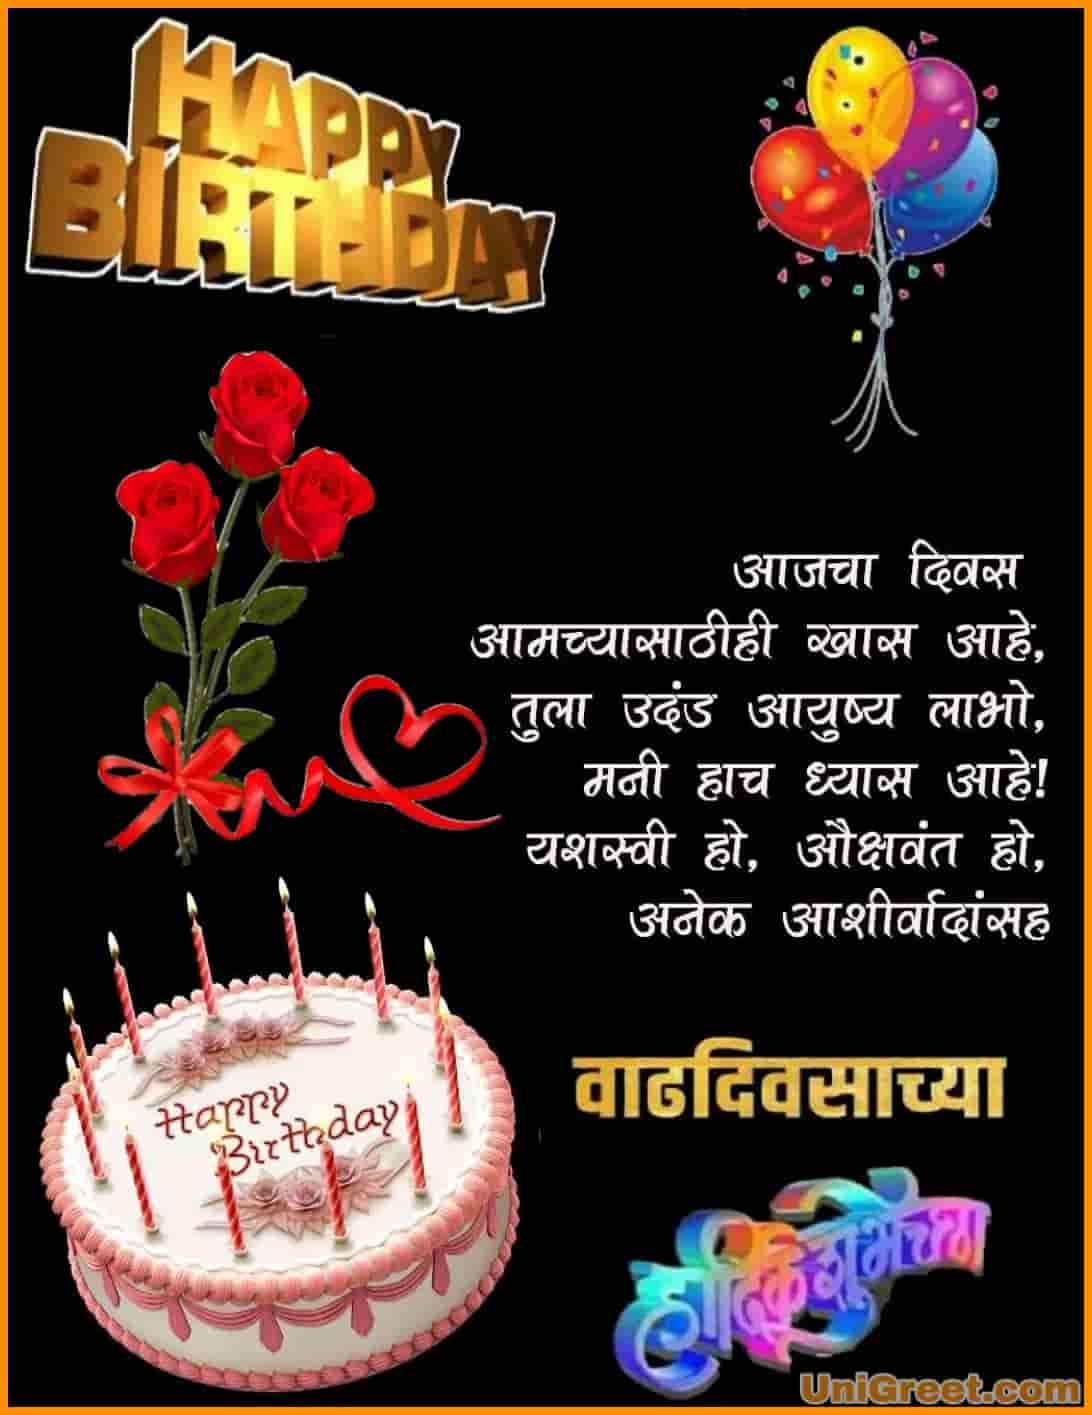 Birthday Greetings Images In Marathi